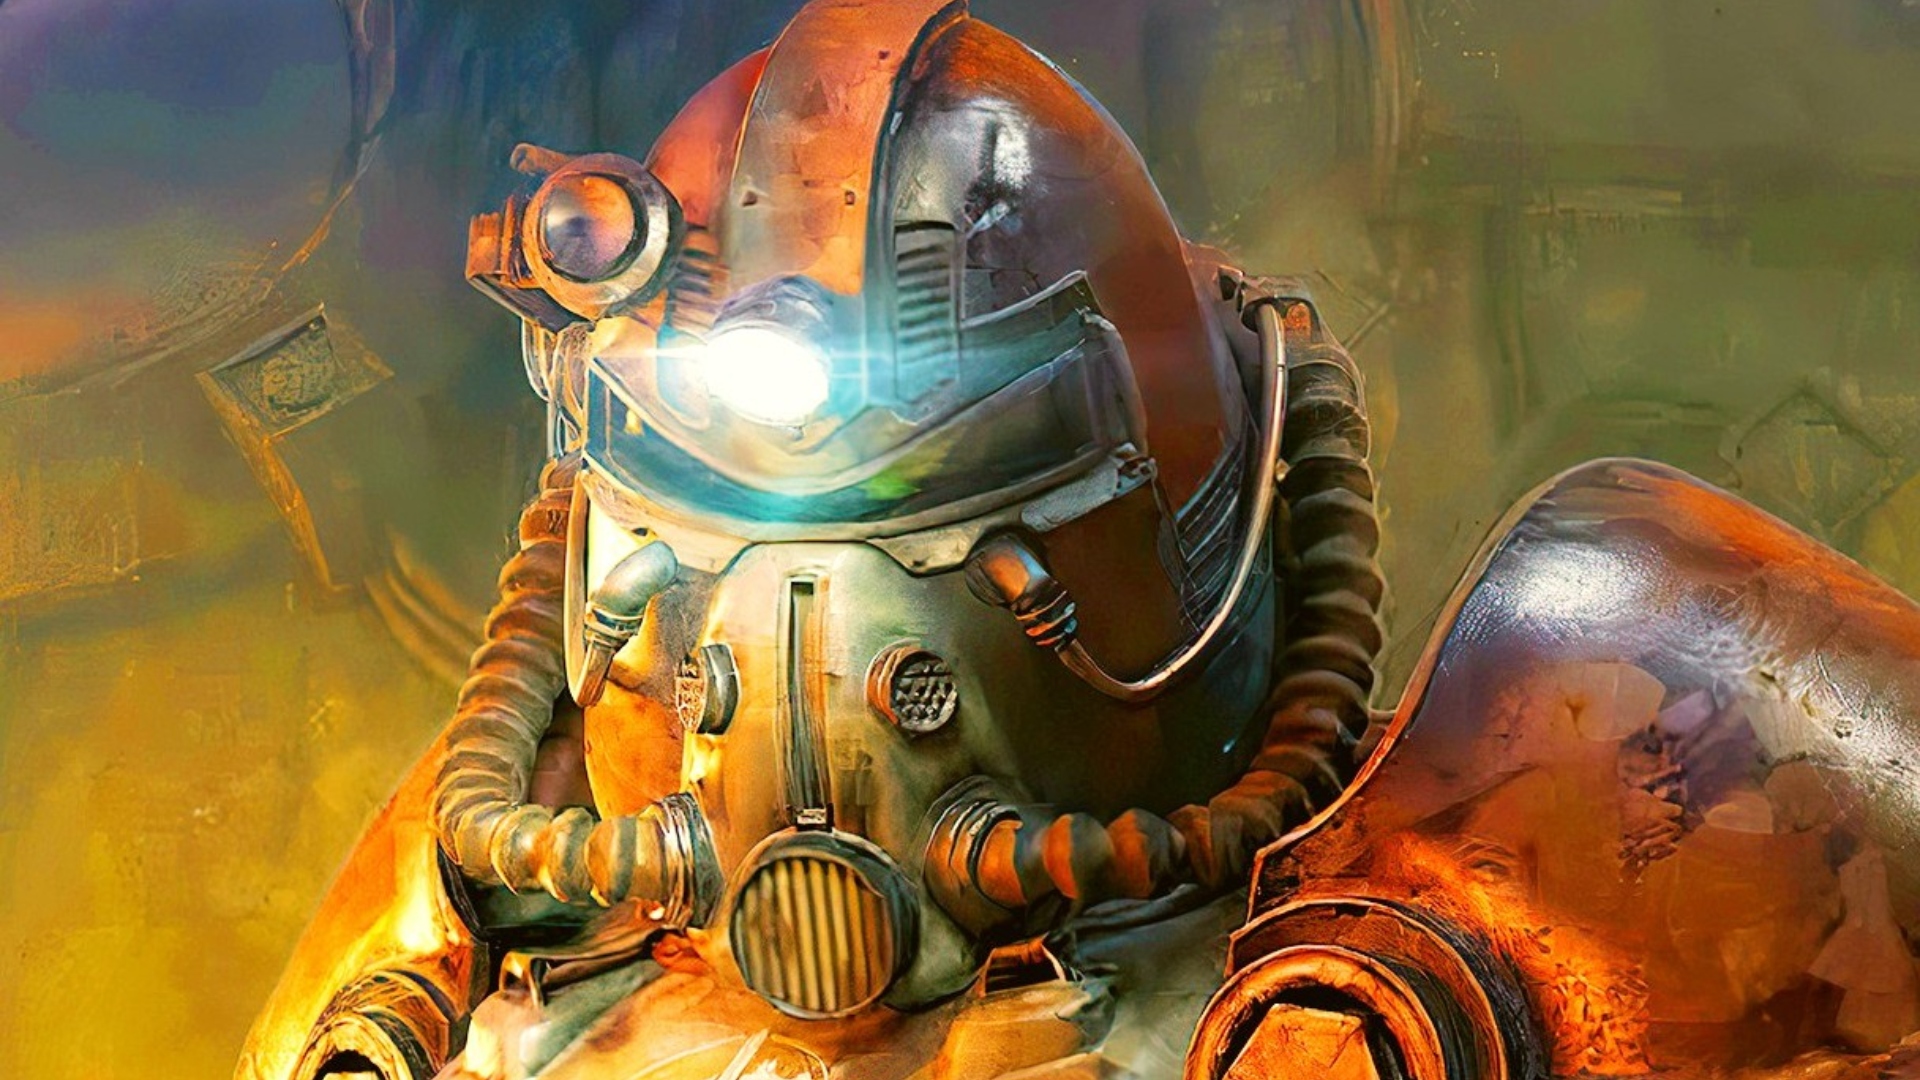 Fallout 4 next gen update shared by former Bethesda exec